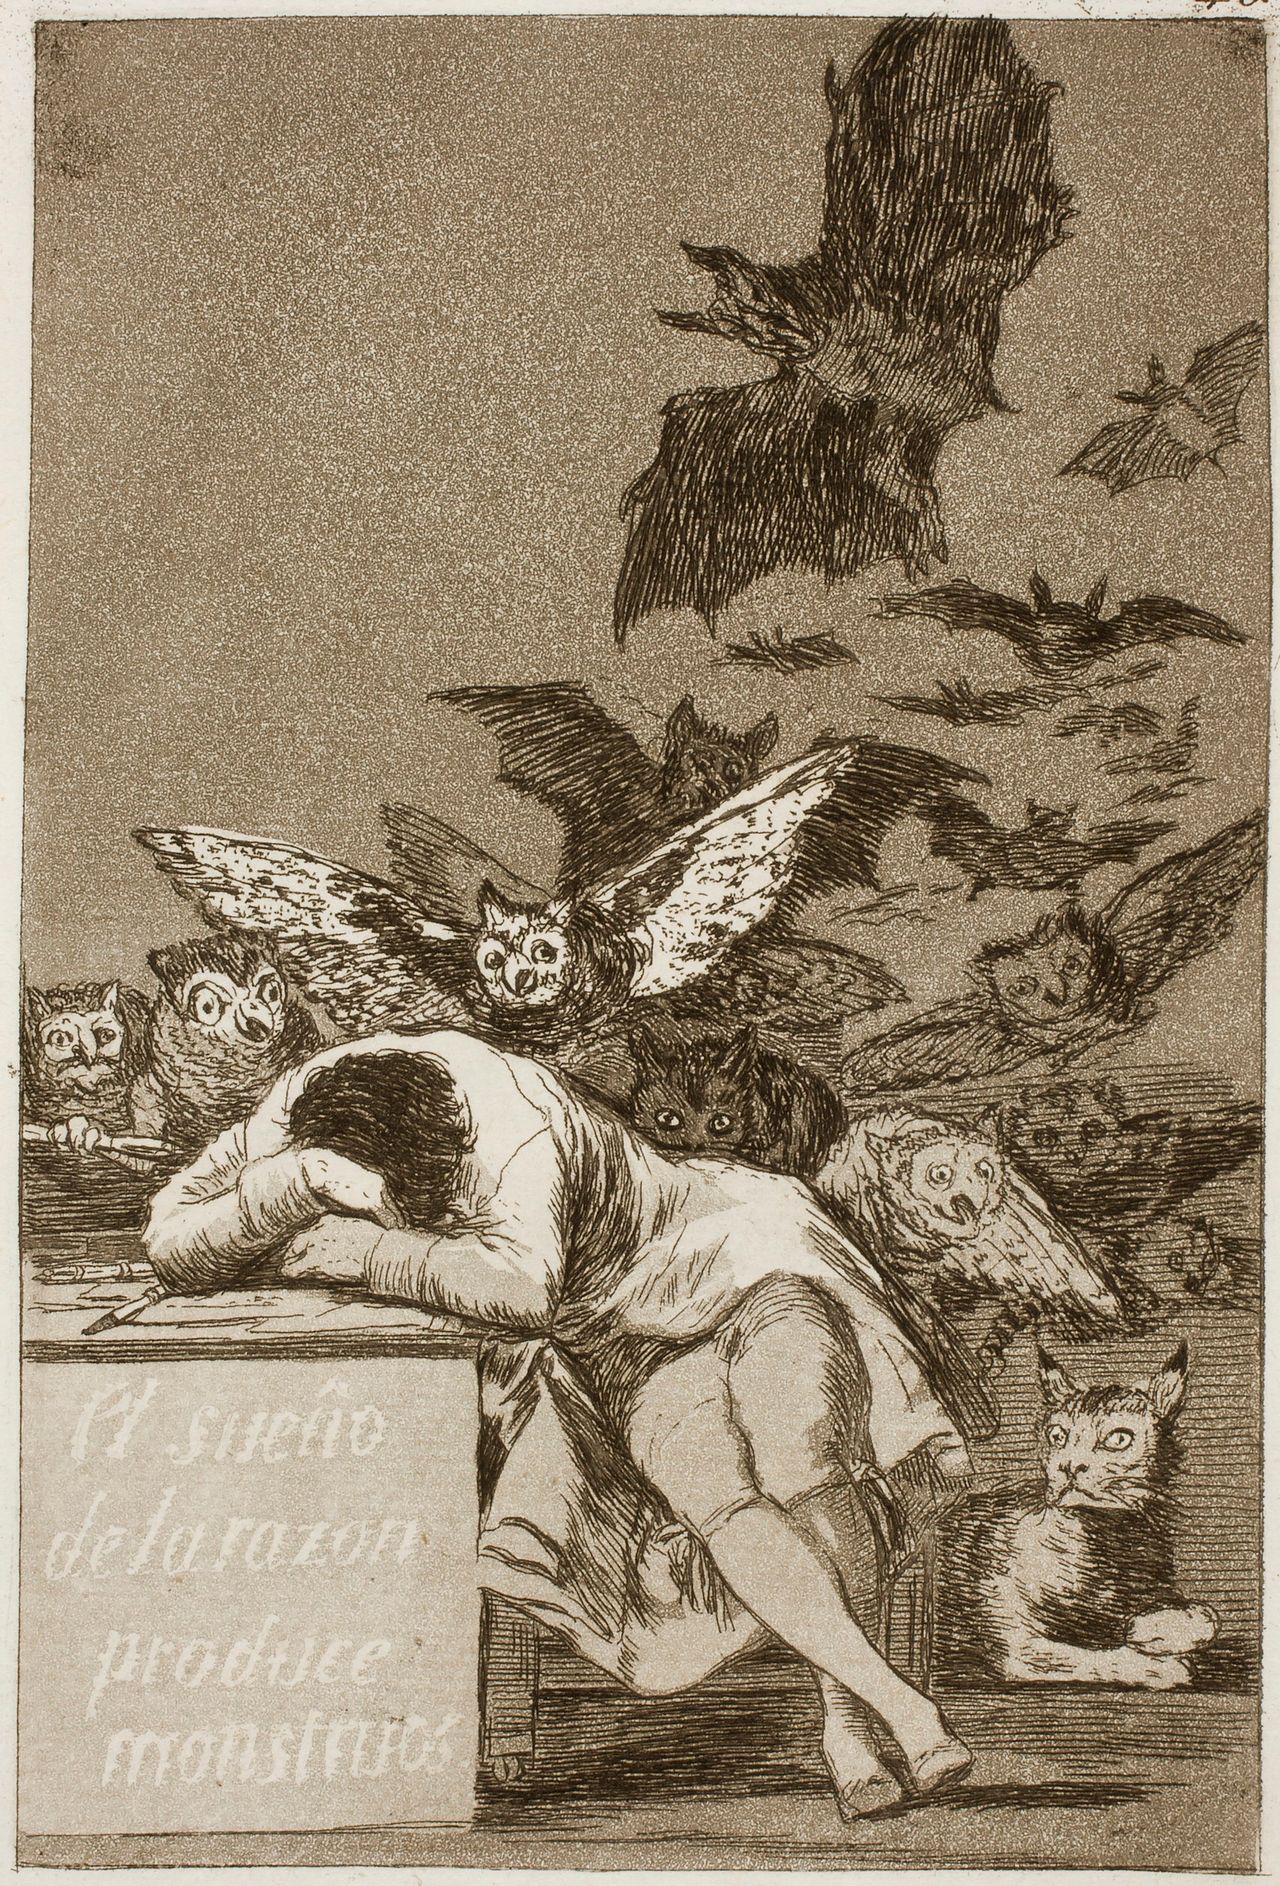 Francisco de Goya, "The Sleep of Reason Produces Monsters, #43," 1799